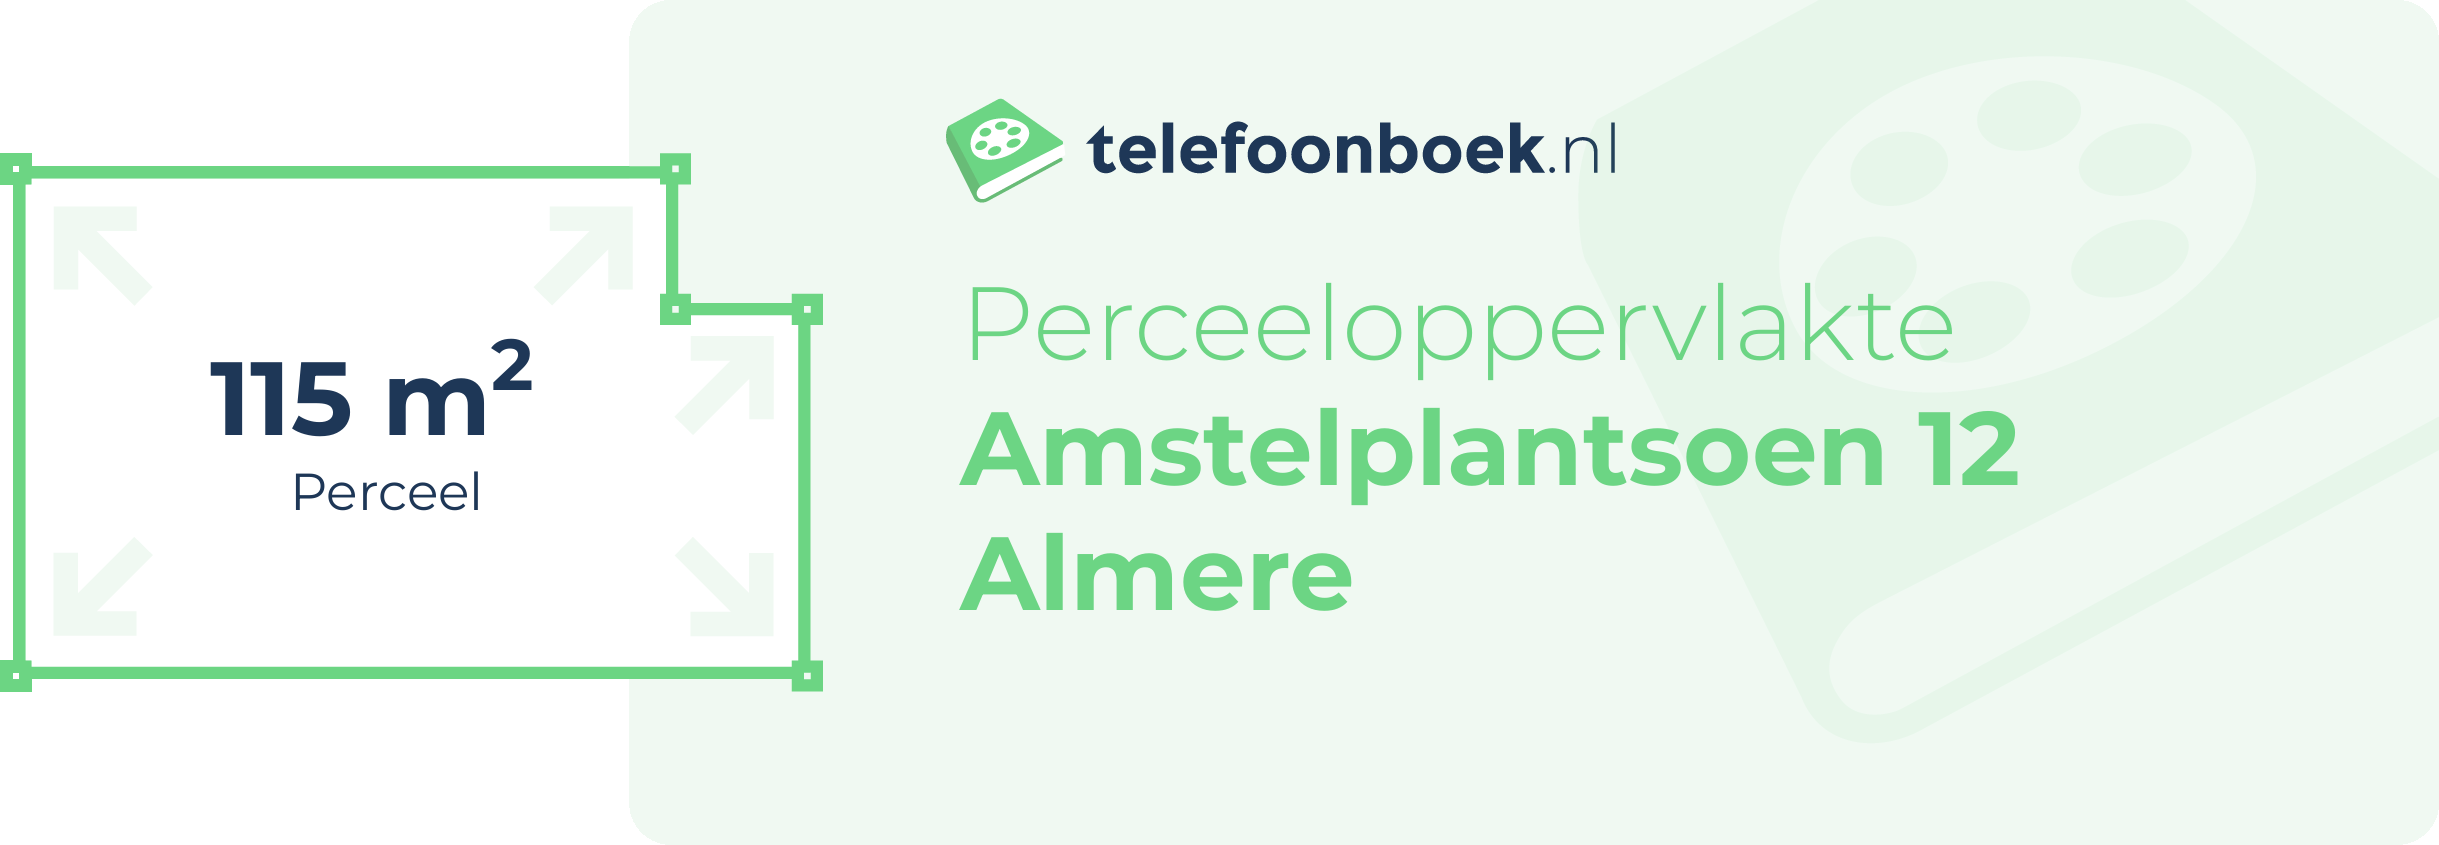 Perceeloppervlakte Amstelplantsoen 12 Almere